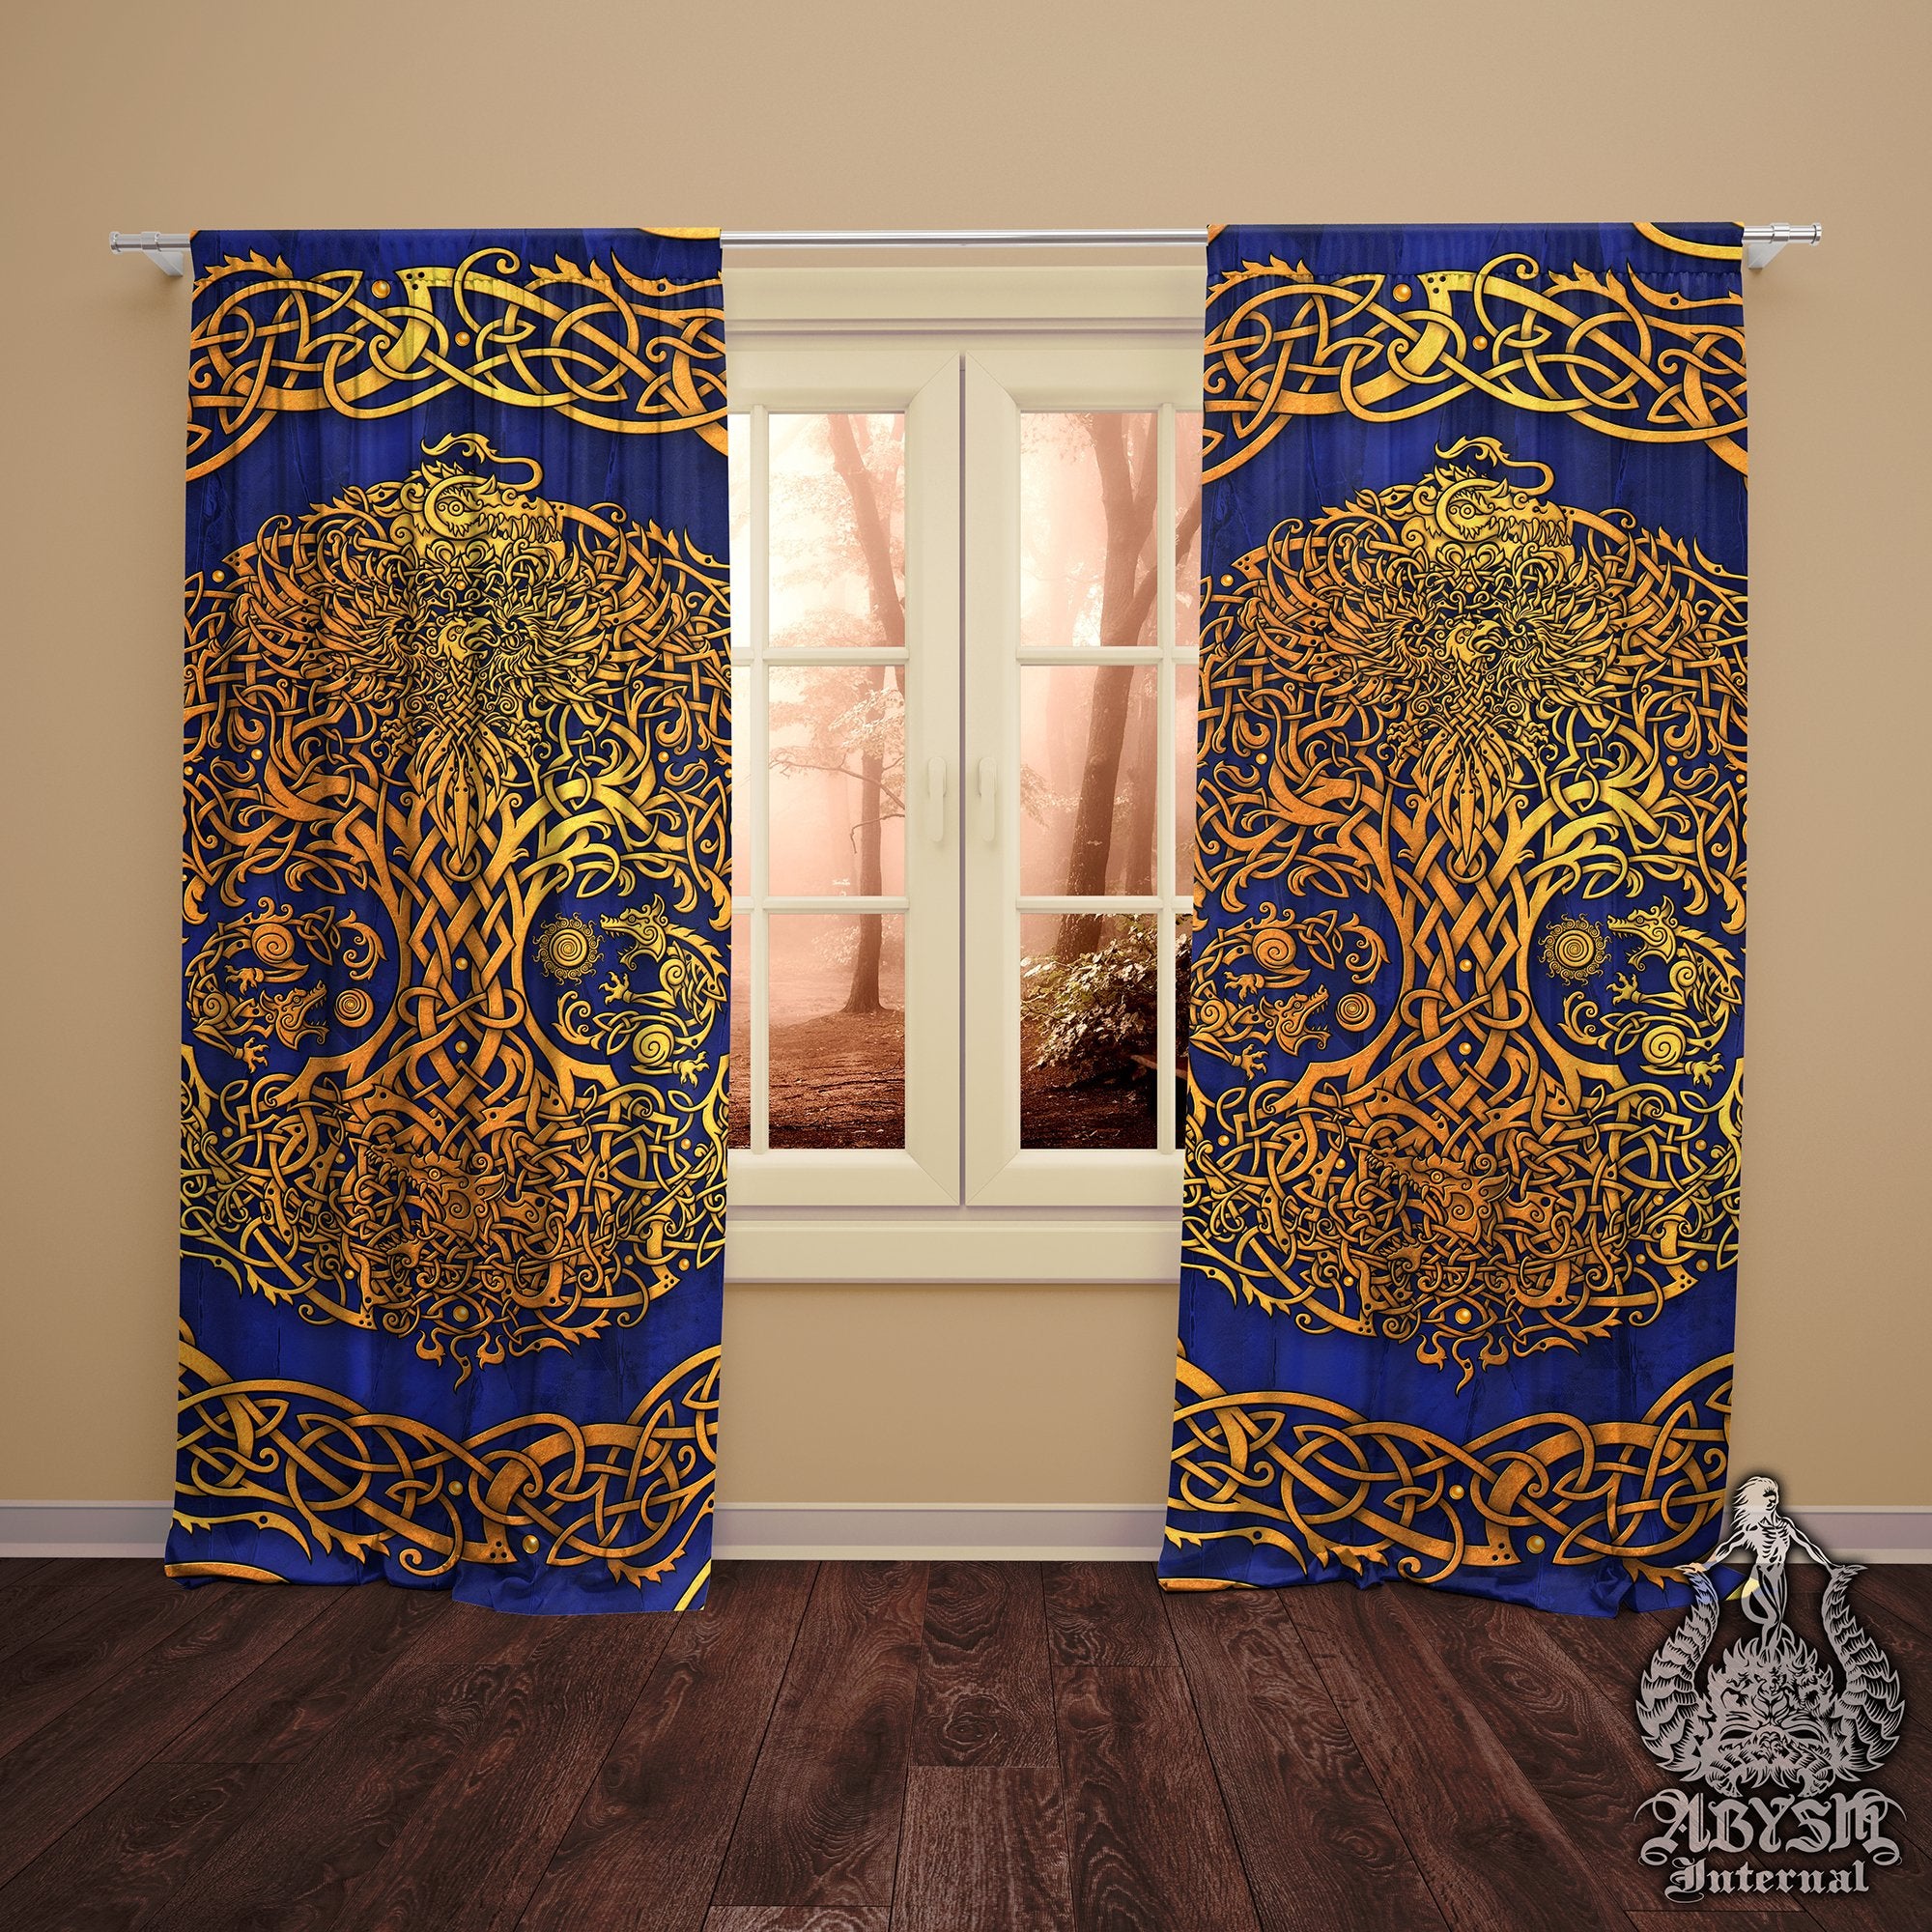 Viking Curtains, 50x84' Printed Window Panels, Gold Yggdrasil, Nordic Tree of Life, Pagan Room Decor, Art Print - 3 Colors - Abysm Internal